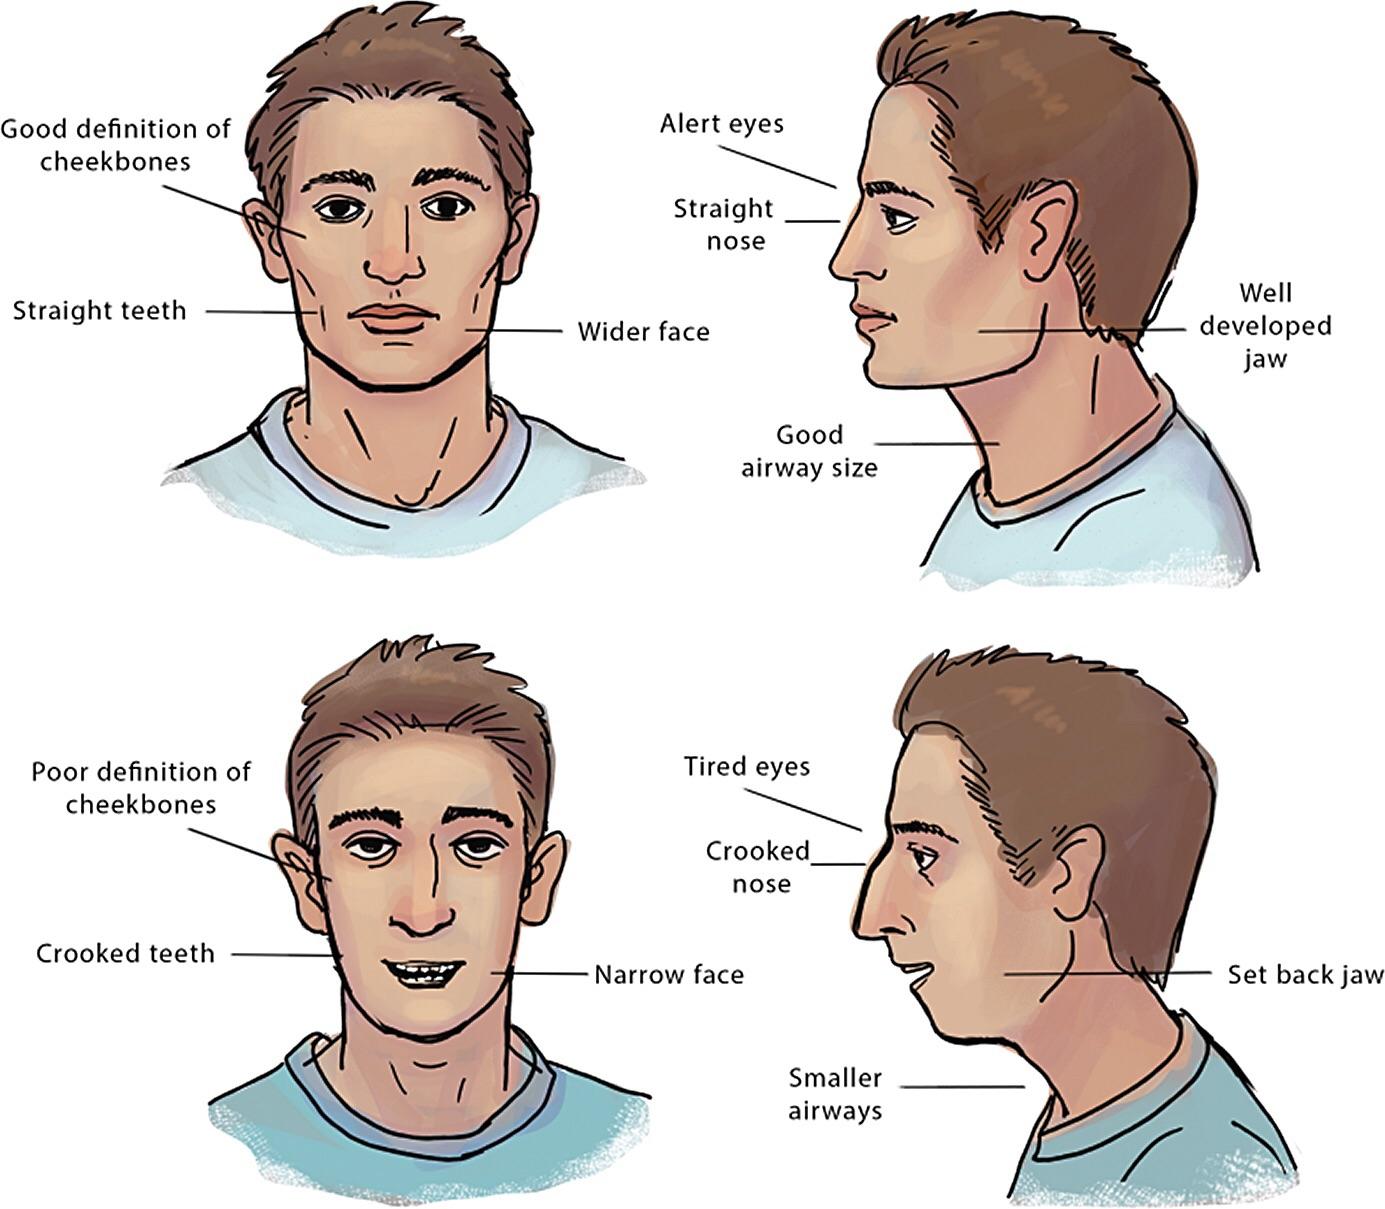 Chad nasal breather vs virgin mouth breather : virginvschad